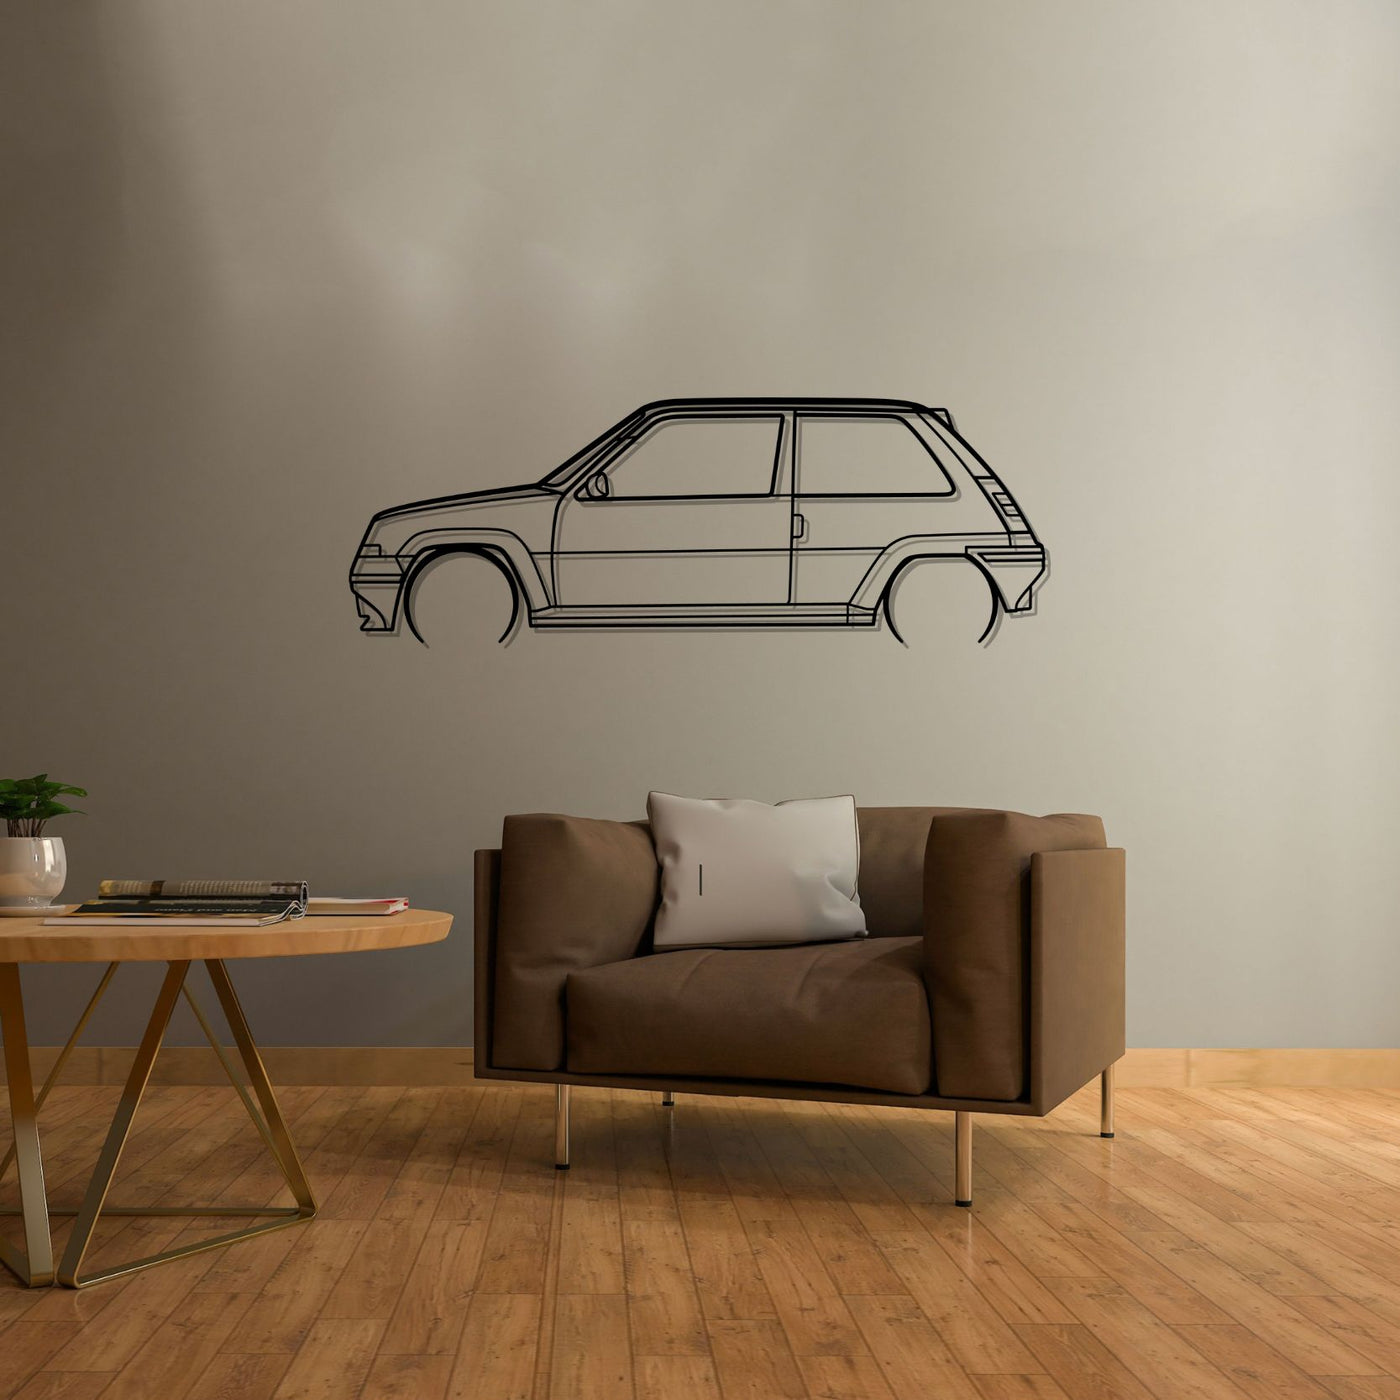 5 GT Turbo Detailed Silhouette Metal Wall Art